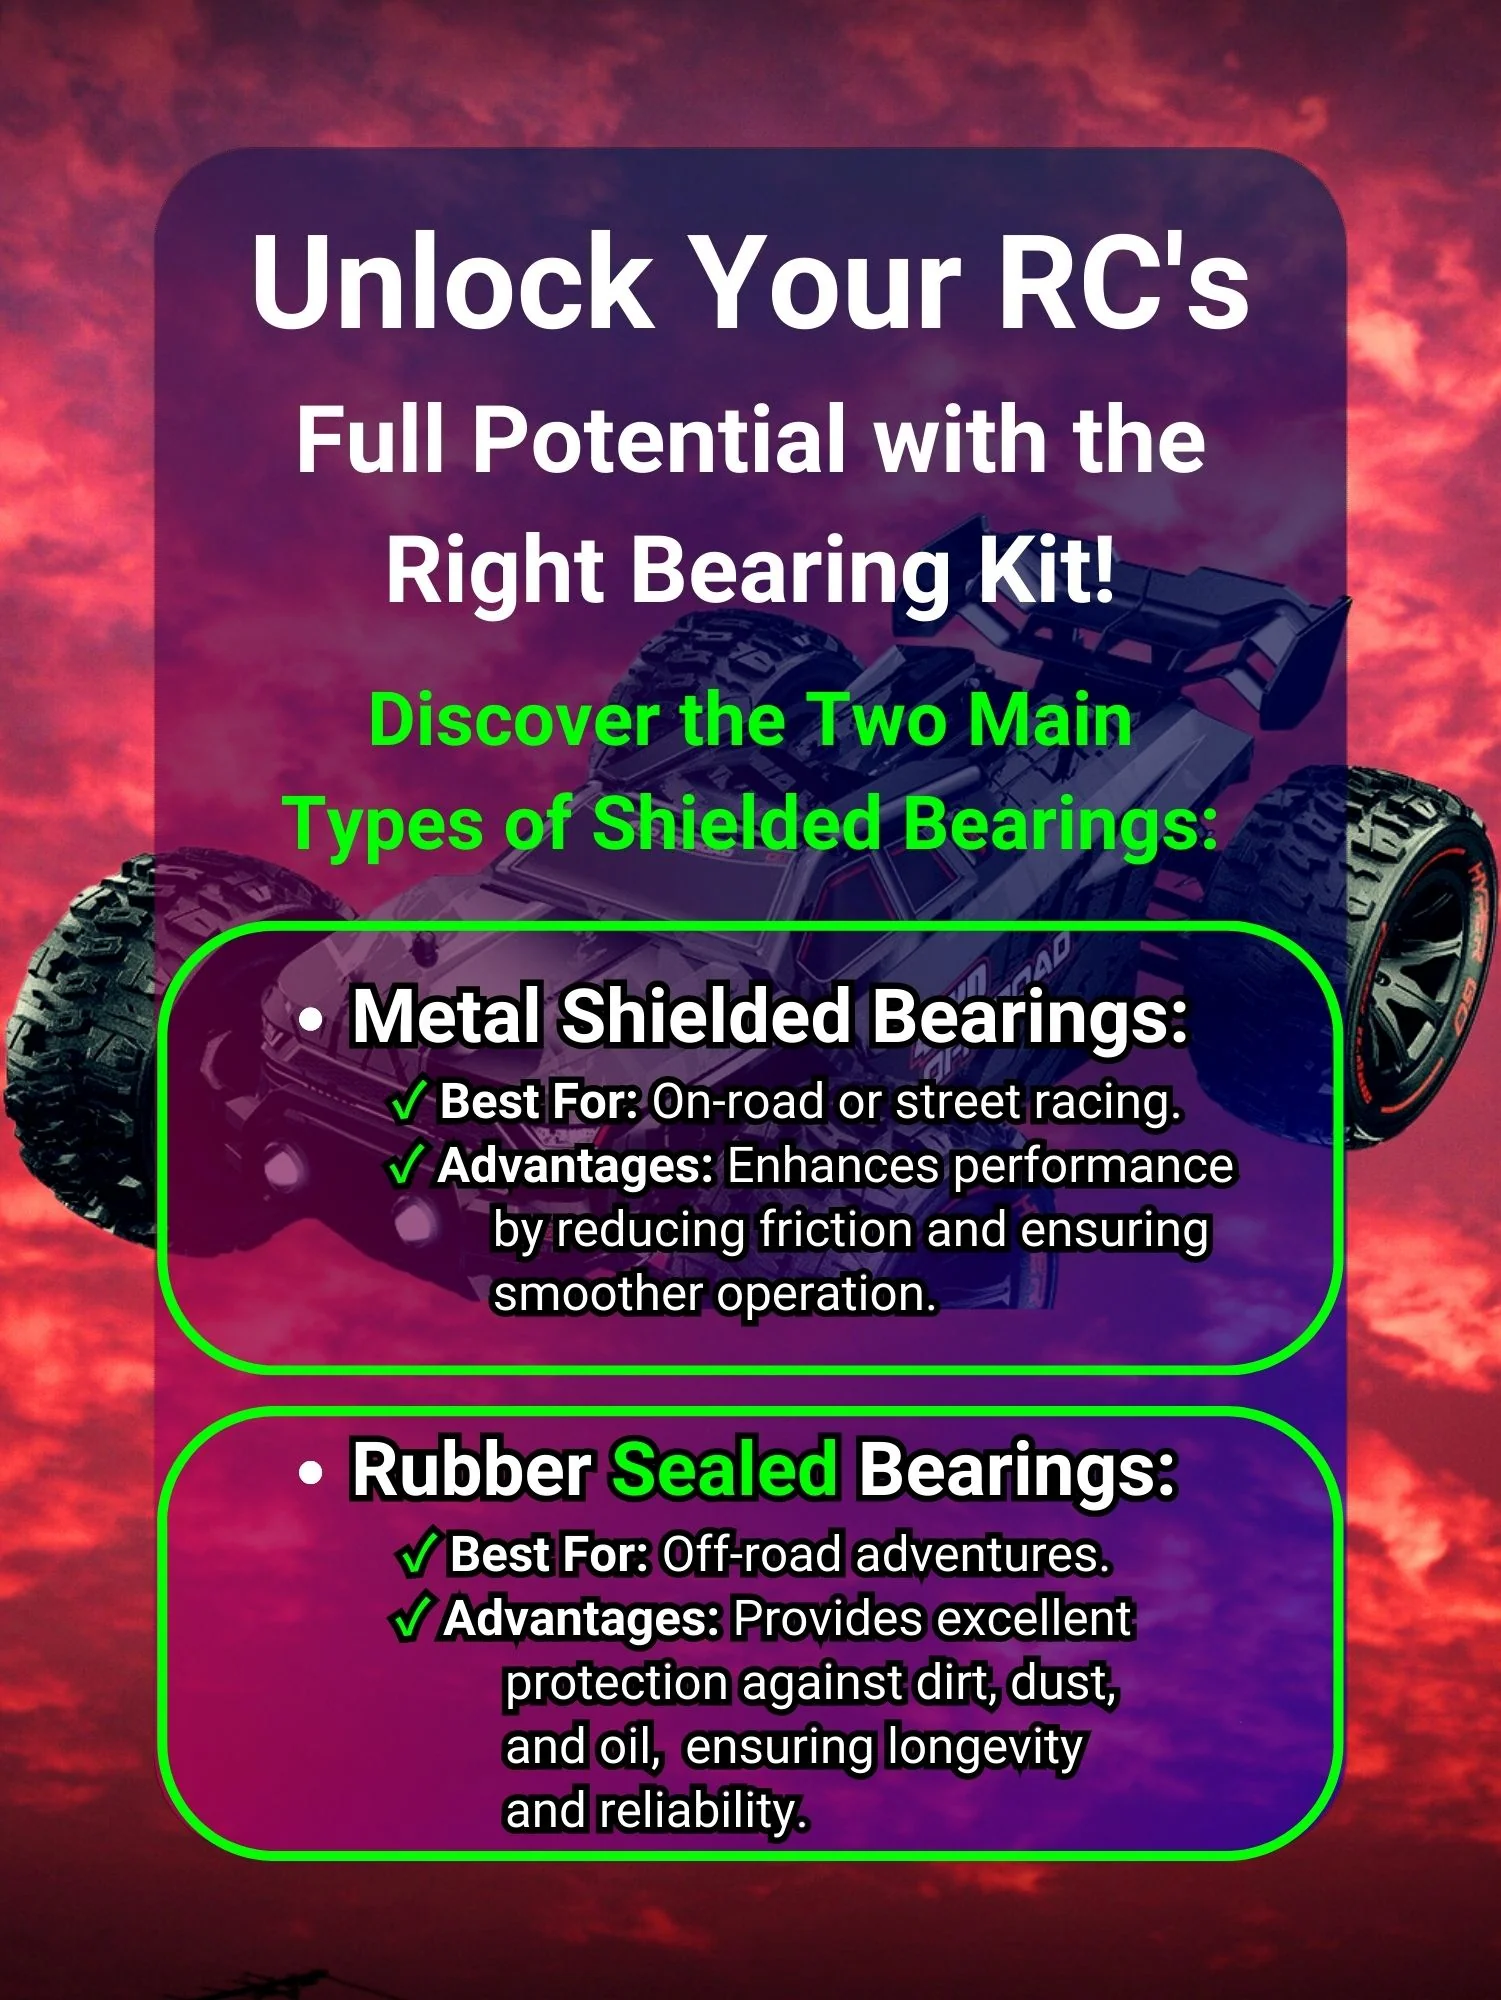 RCScrewZ Metal Shielded Bearings alg031b for Align T-REX 700e F3C RH70E08XT Heli - Picture 2 of 12